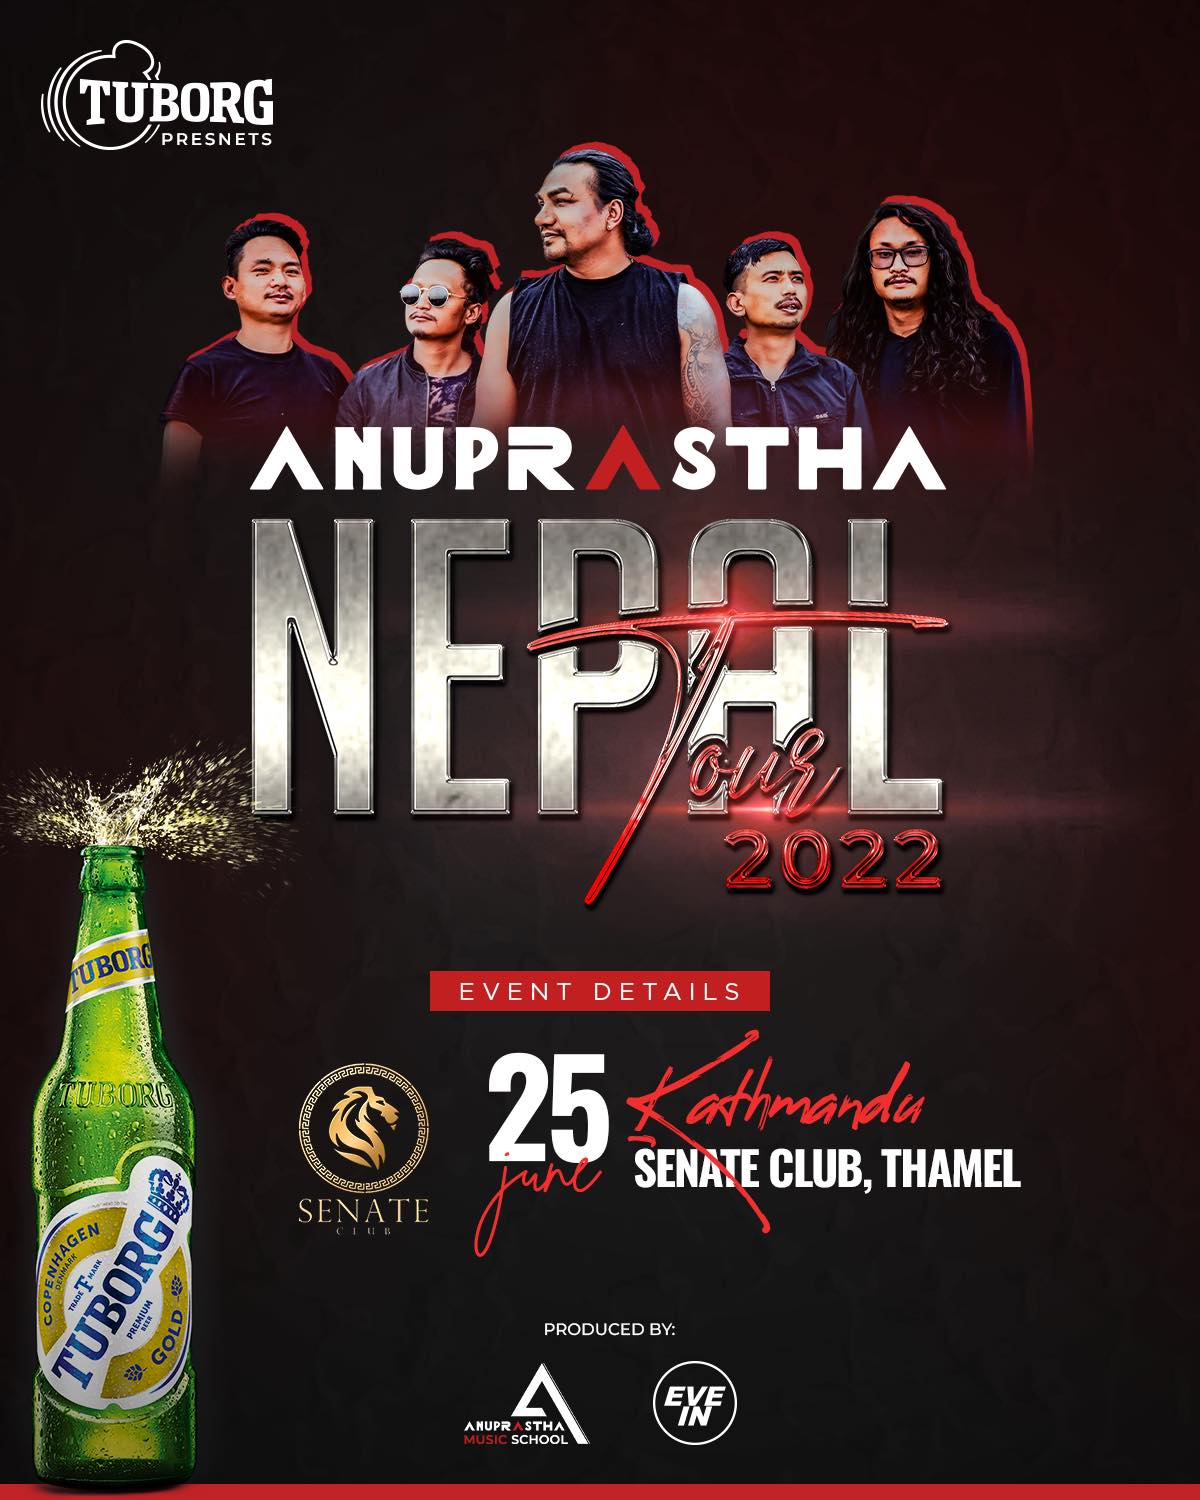 Anuprastha will be Performing Live at Senate Club,Thamel